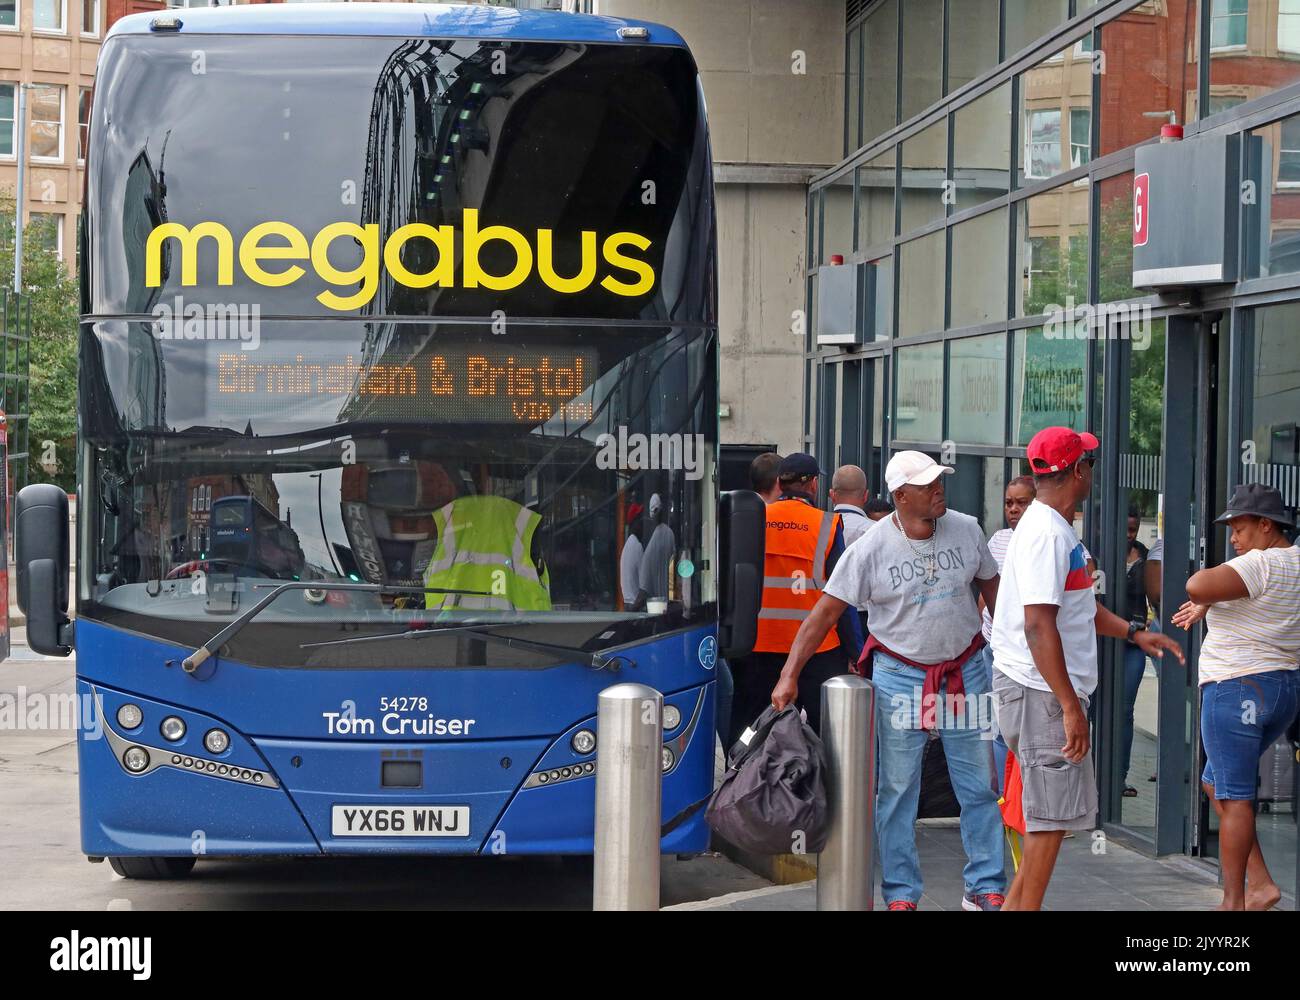 Megabus to Bristol , in Shudehill bus station and interchange, Manchester, England, UK, M4 2AF, Tom Cruiser , YX66 WNJ Stock Photo